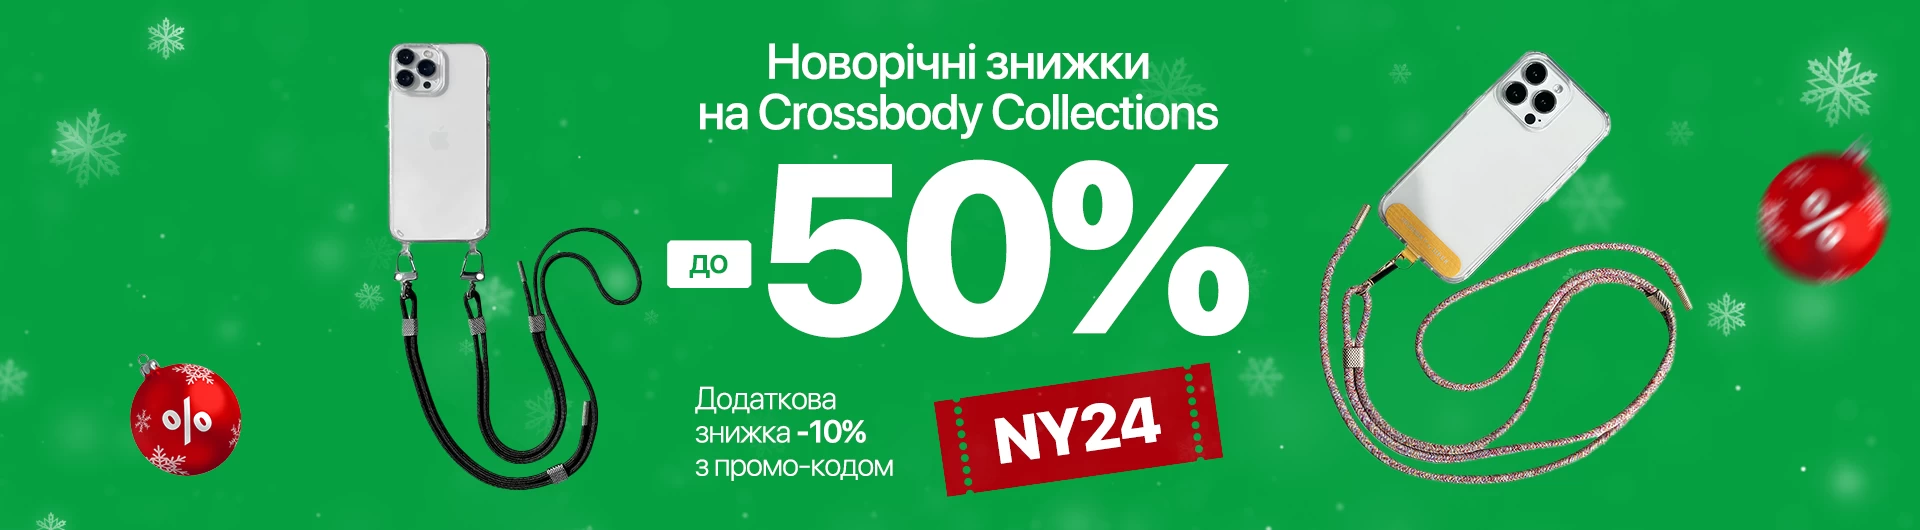 Crossbody Collections - купуй подарунок у Івана Чохла